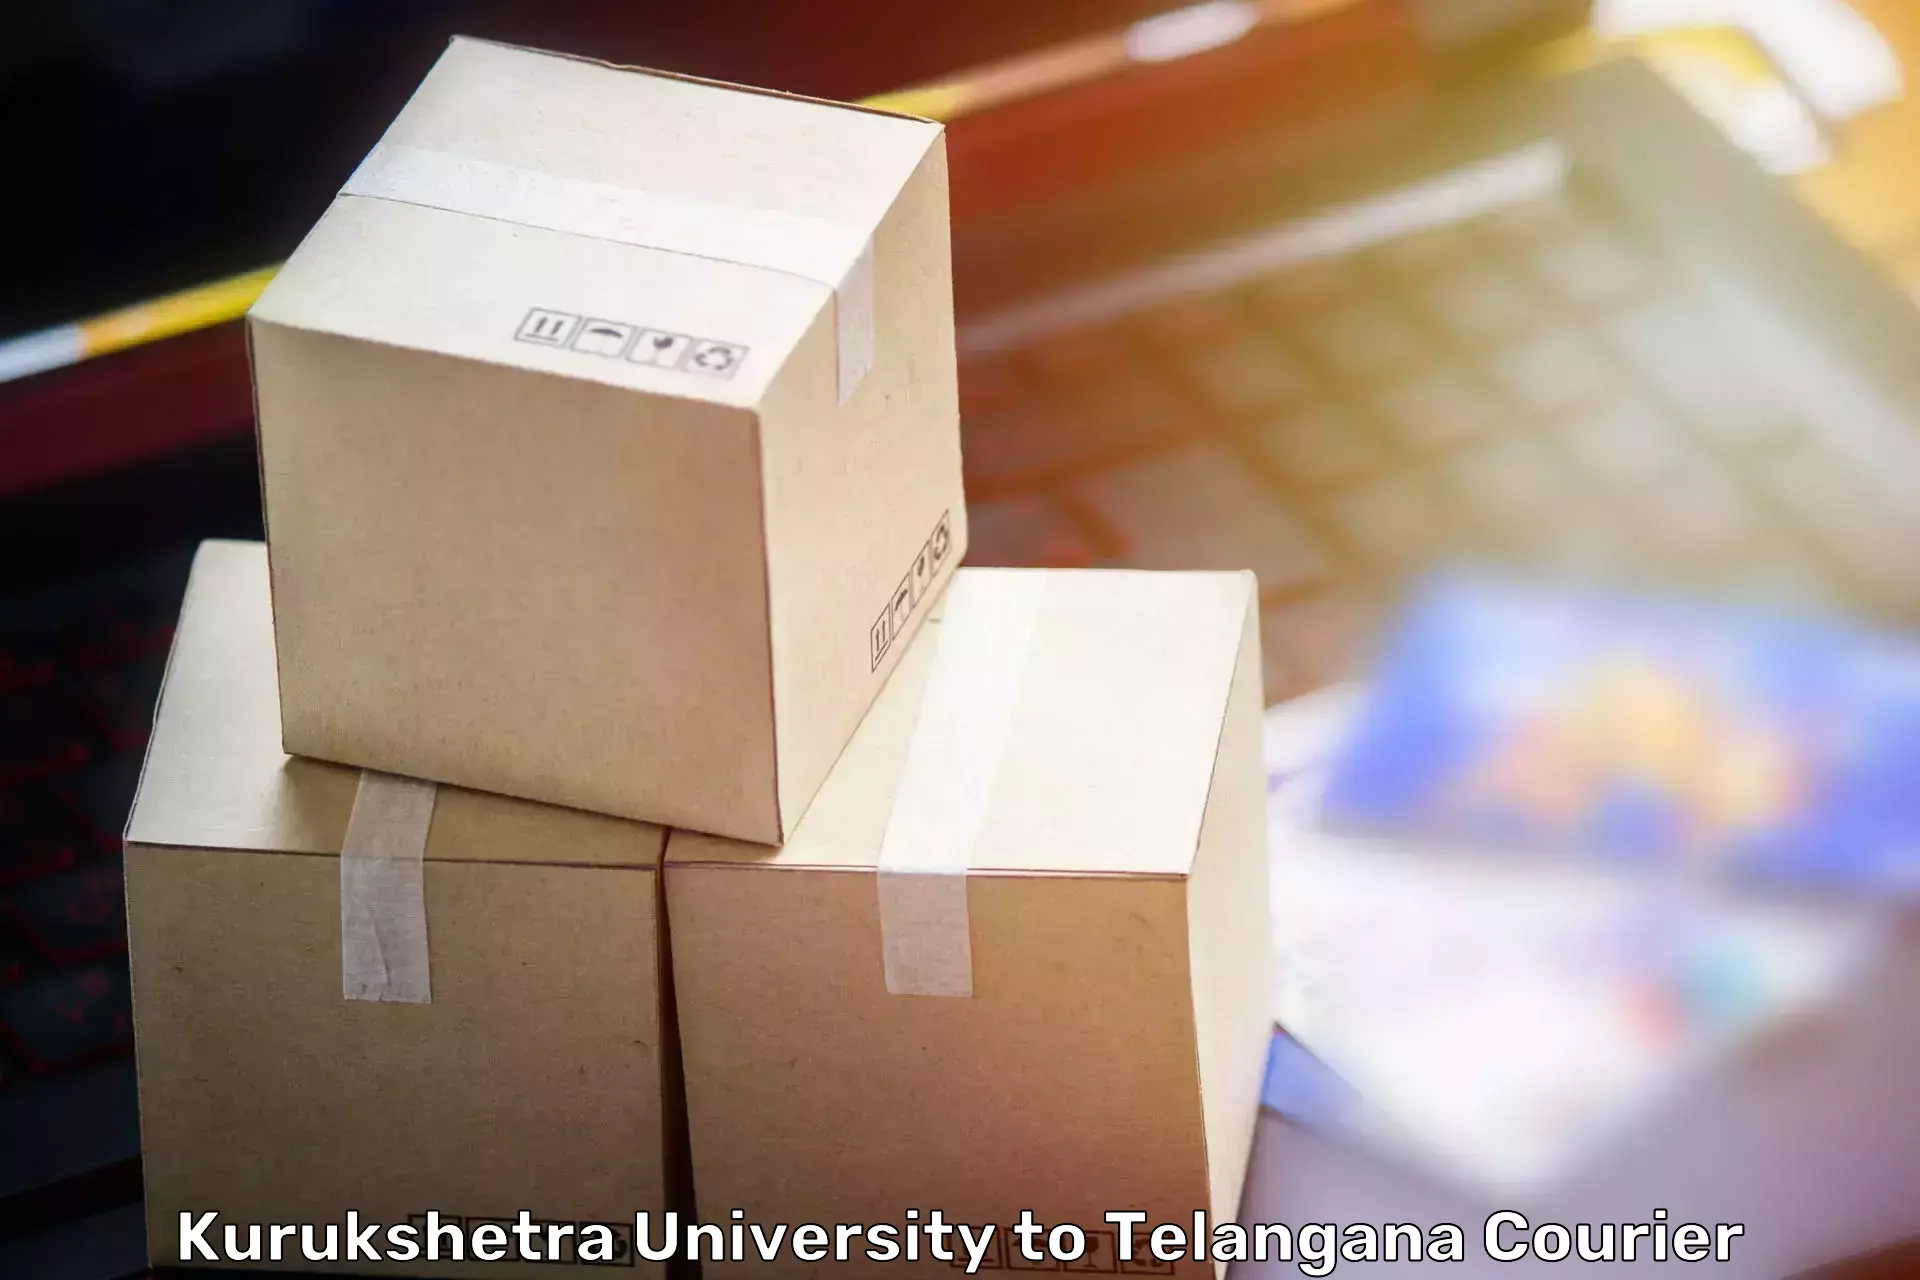 Furniture delivery service Kurukshetra University to Alair